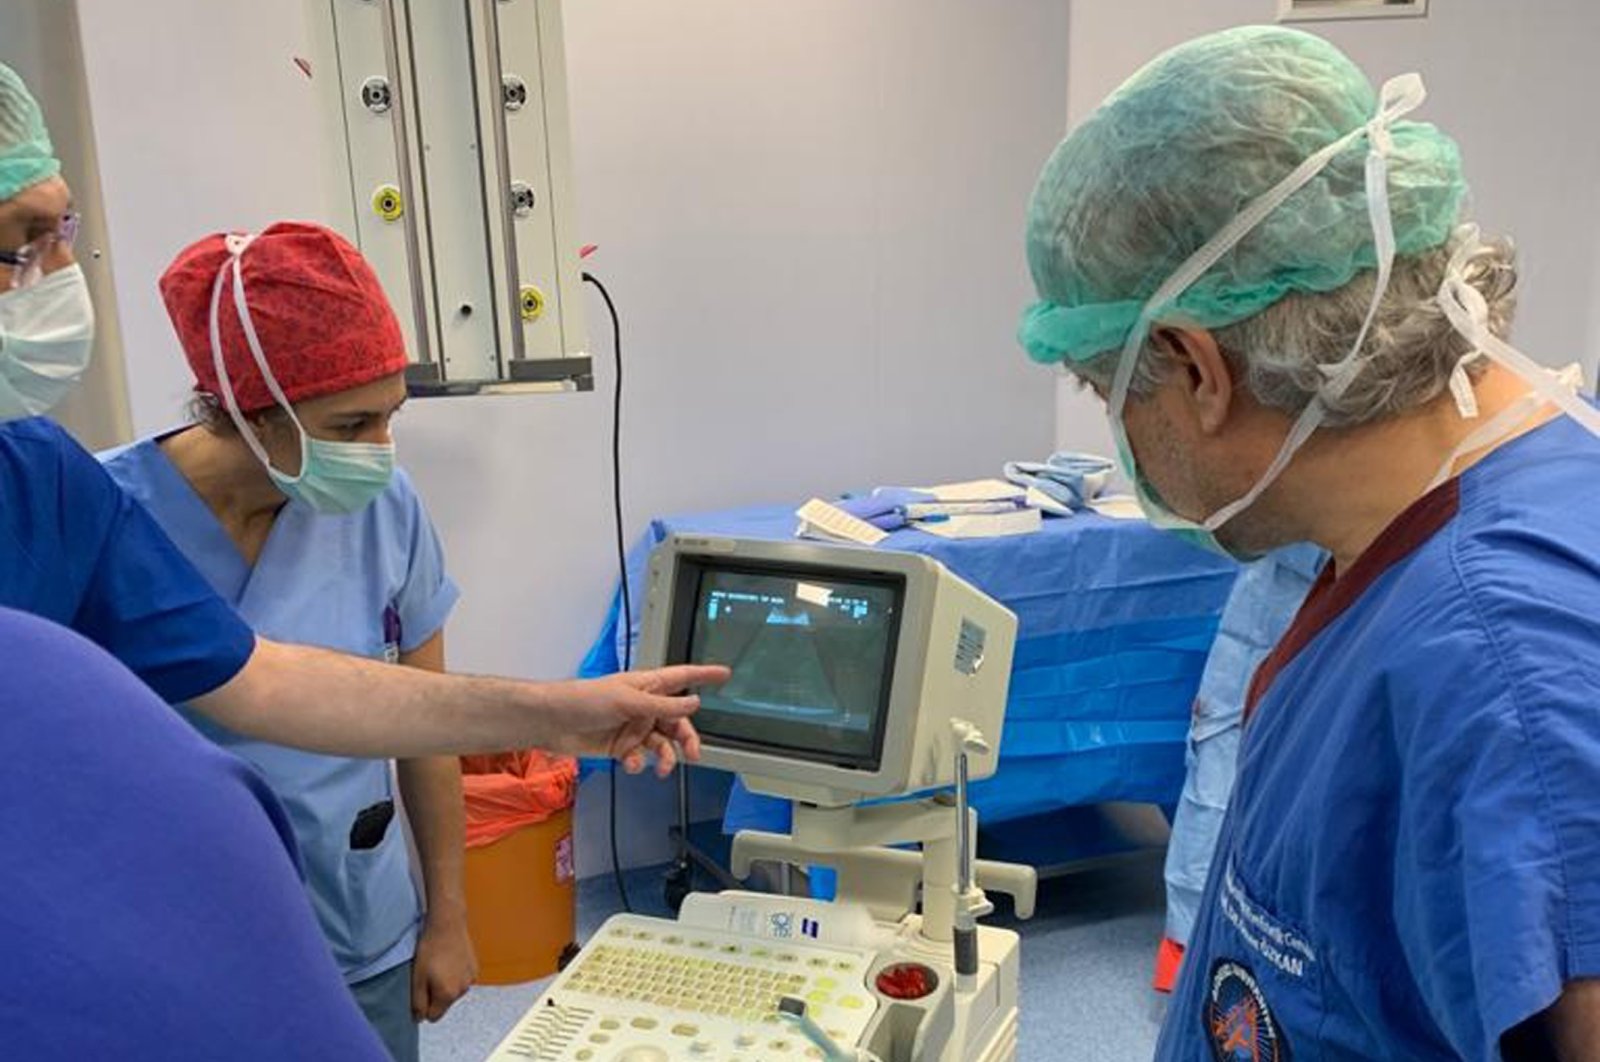 A group of doctors, including Prof. Ömer Özkan (R), make last checks as Derya Sert gives birth, June 26, 2020. (DHA Photo)